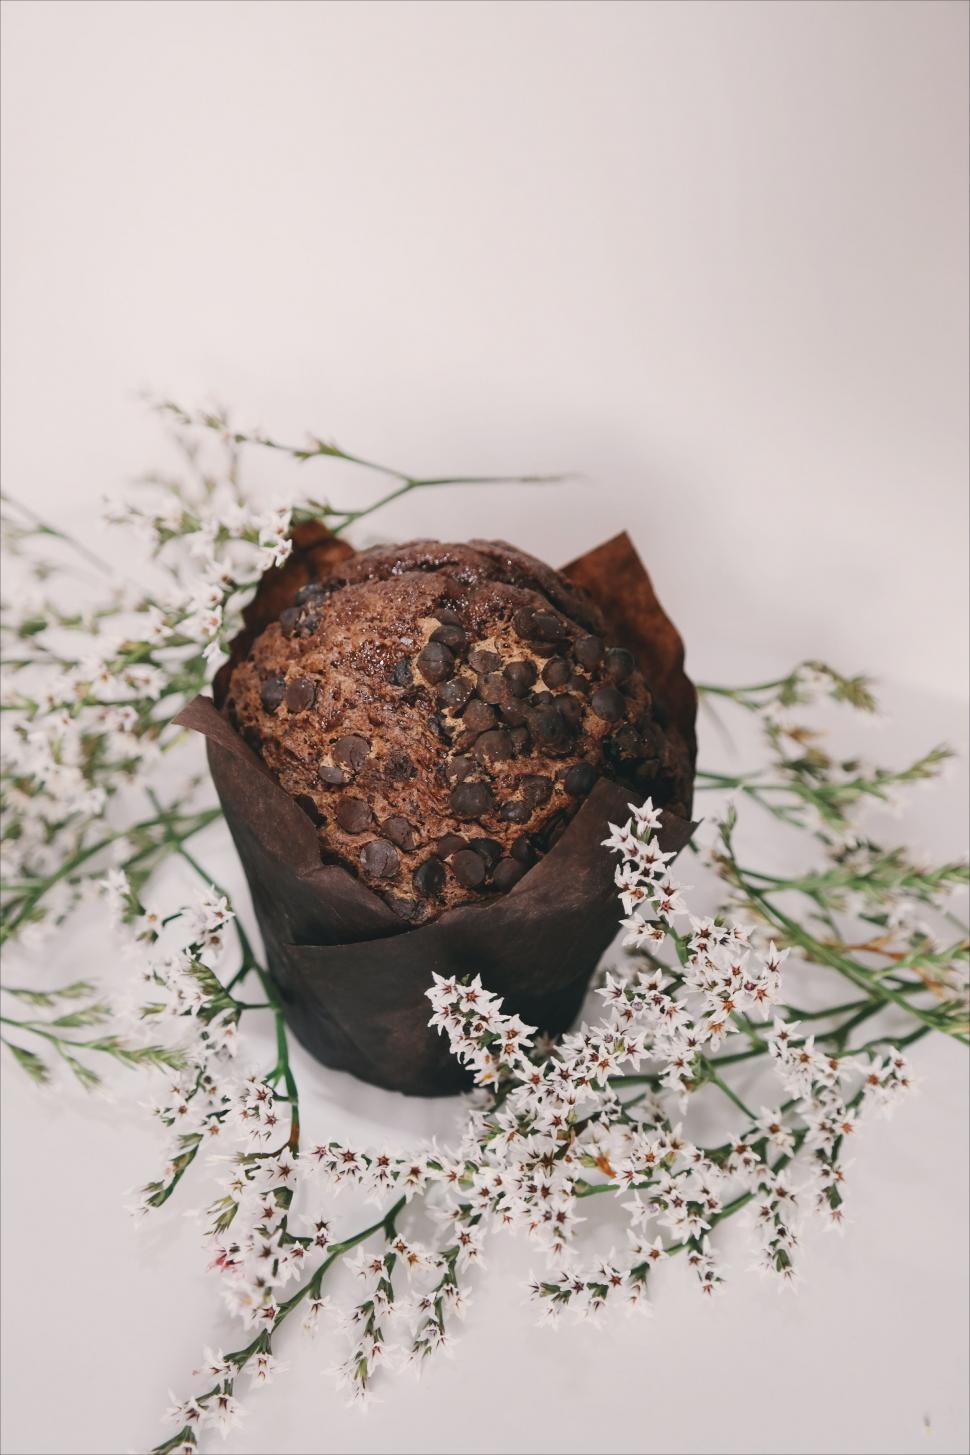 Free Image of Chocolate Muffin  